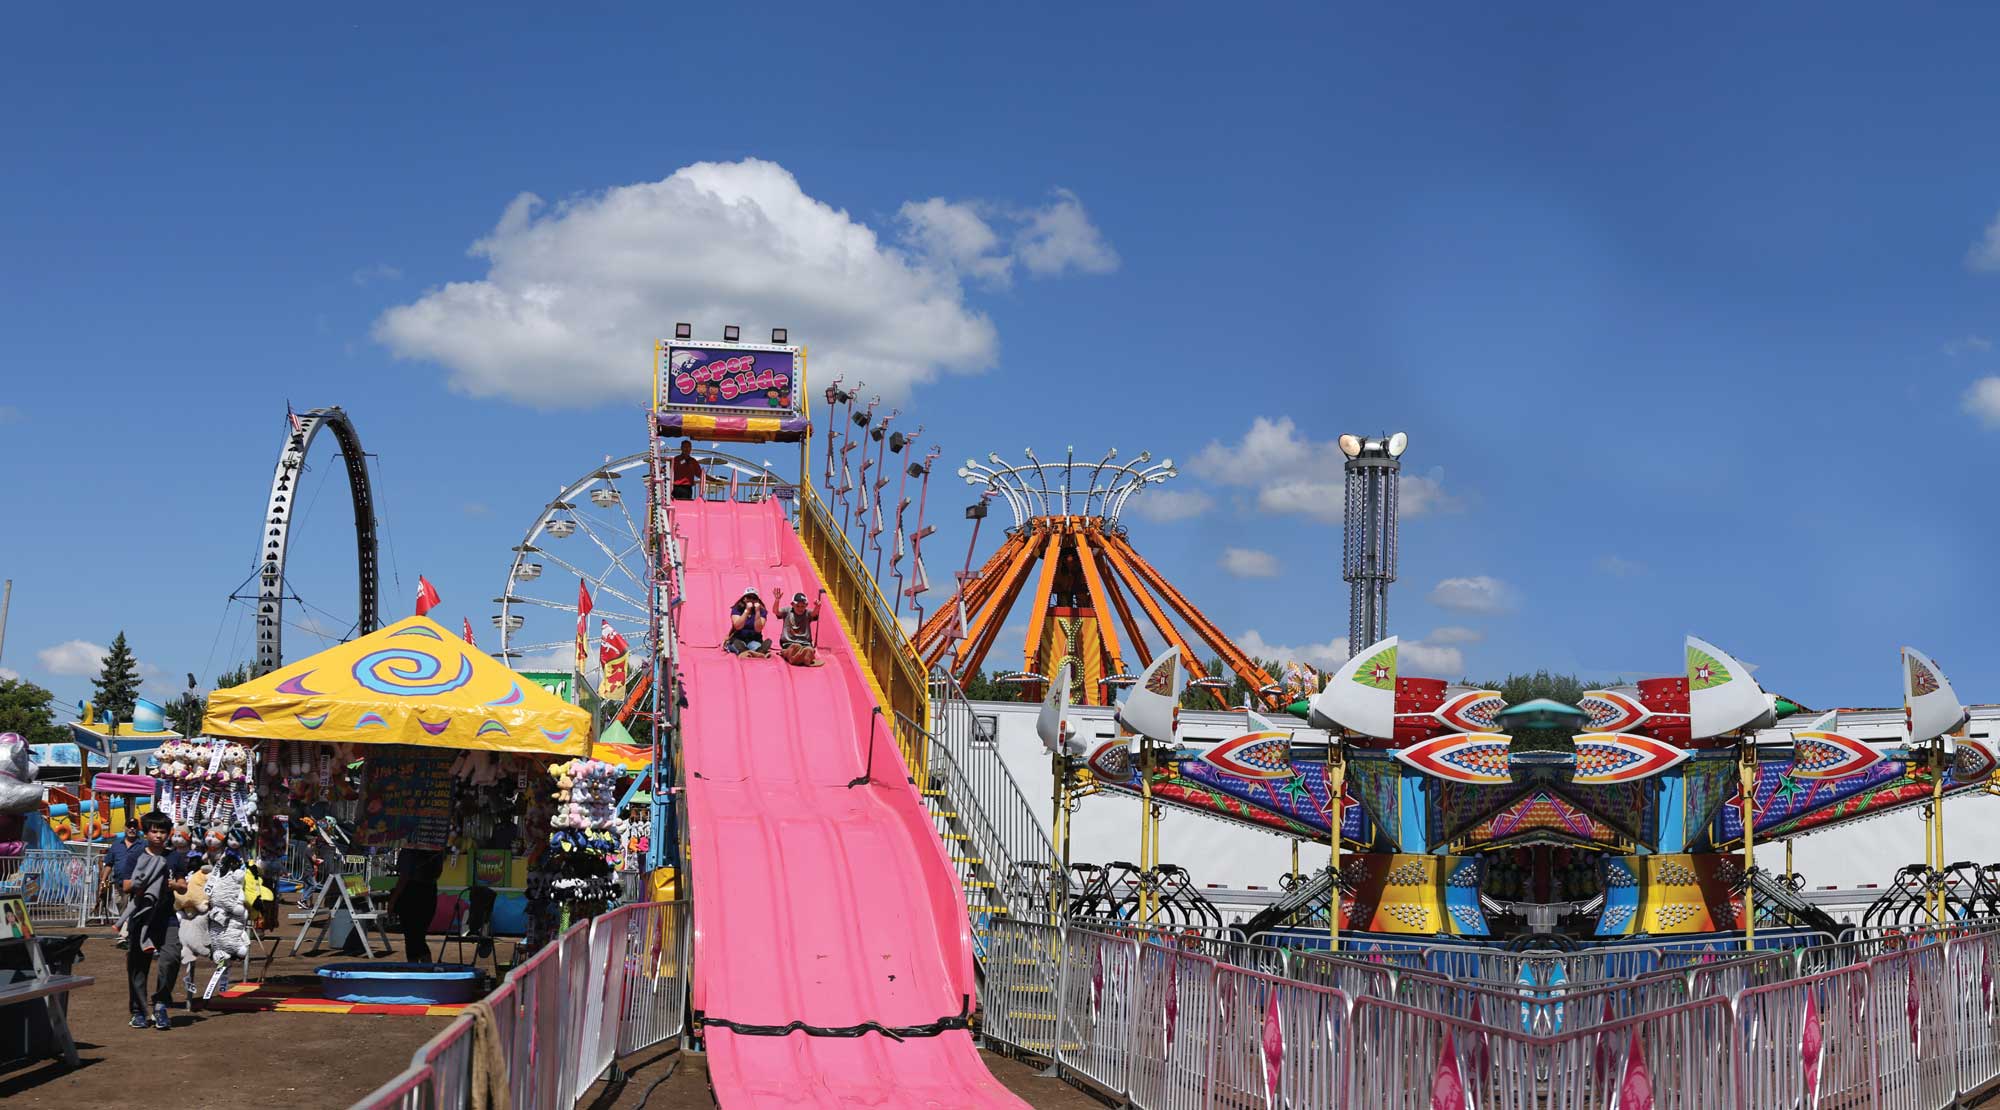 children going down pink slide at a fairground under a blue sky